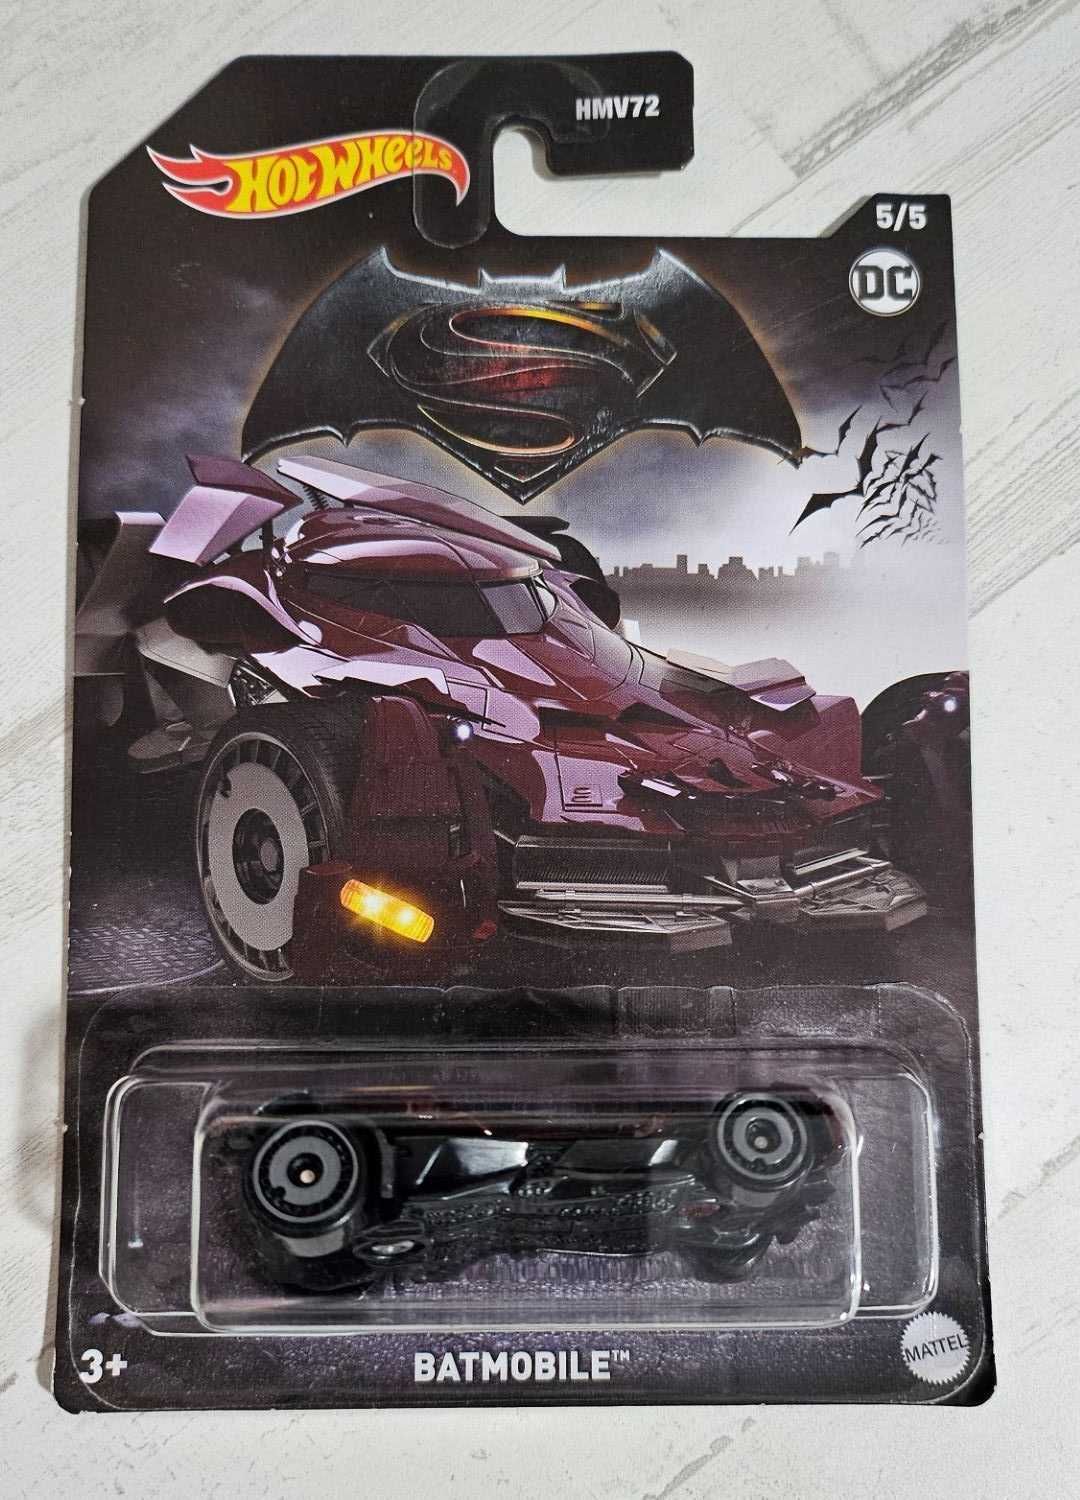 Hot Wheels HMV72 DC Batman Vs Superman Batmobile 5/5